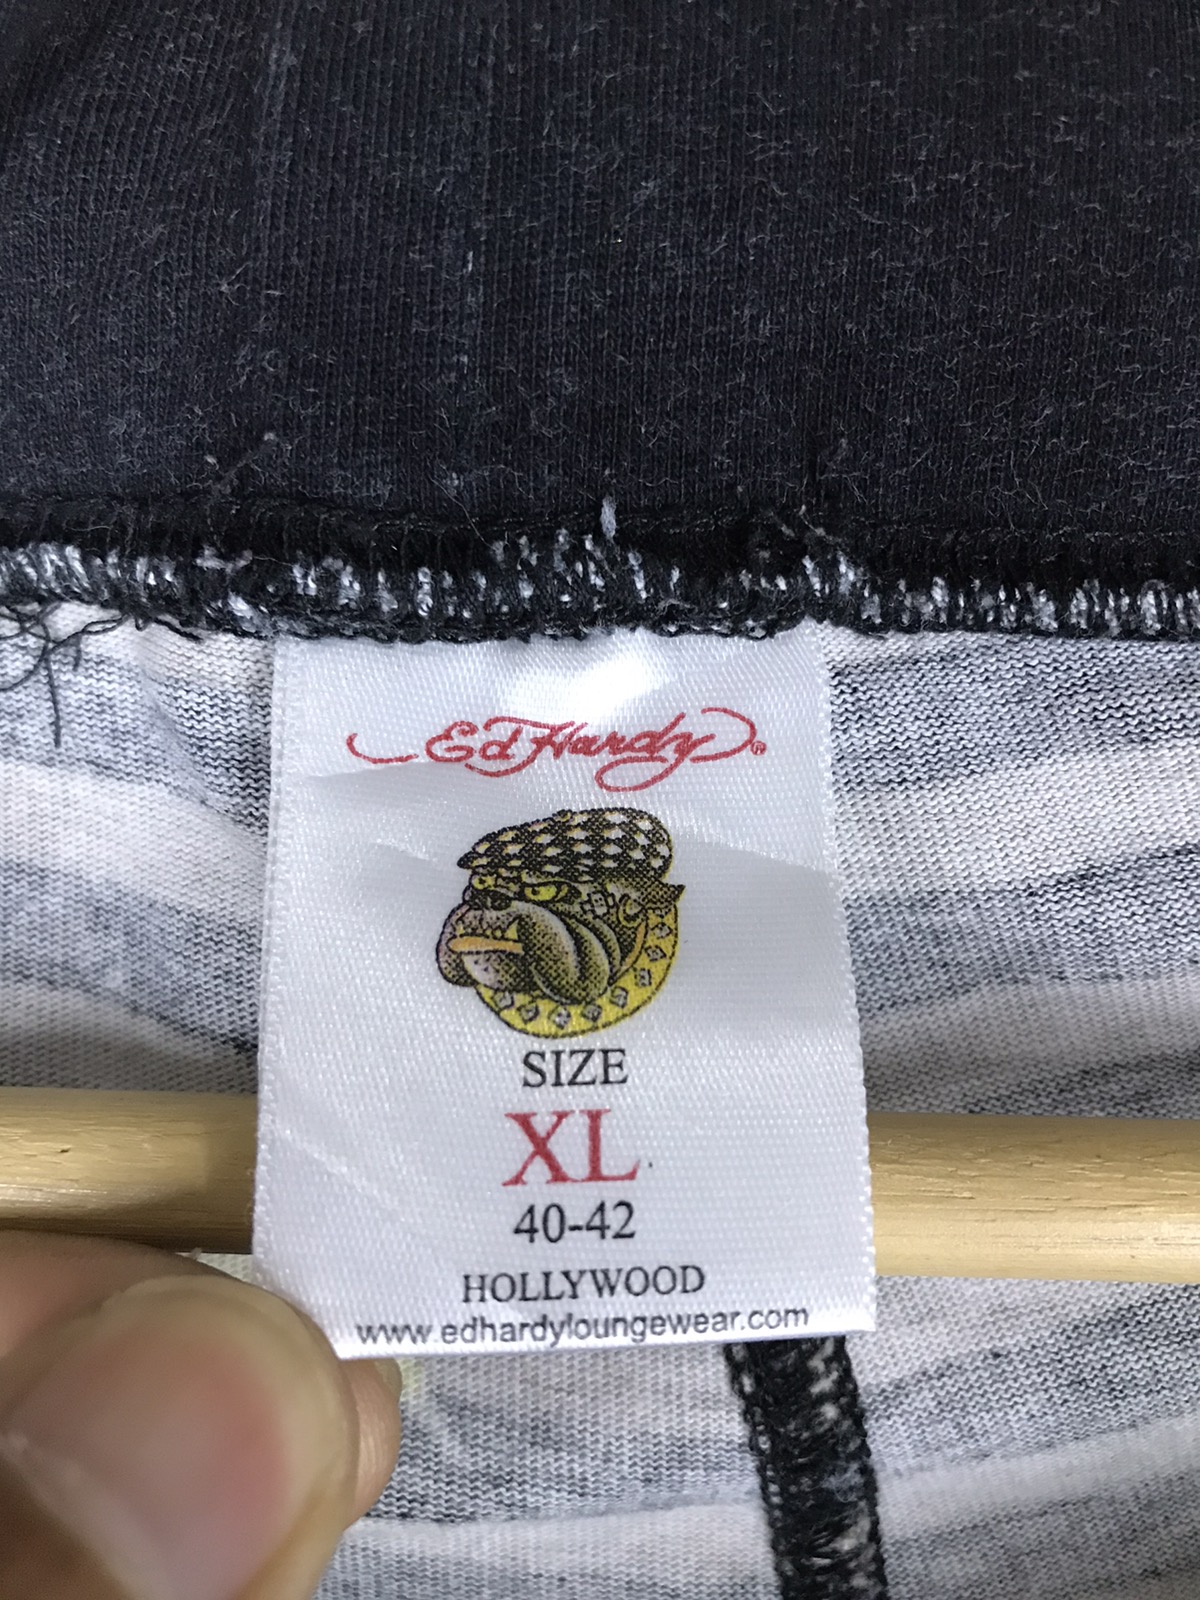 Ed Hardy - Ed Hardy Loungewear Overprint Size XL - 10